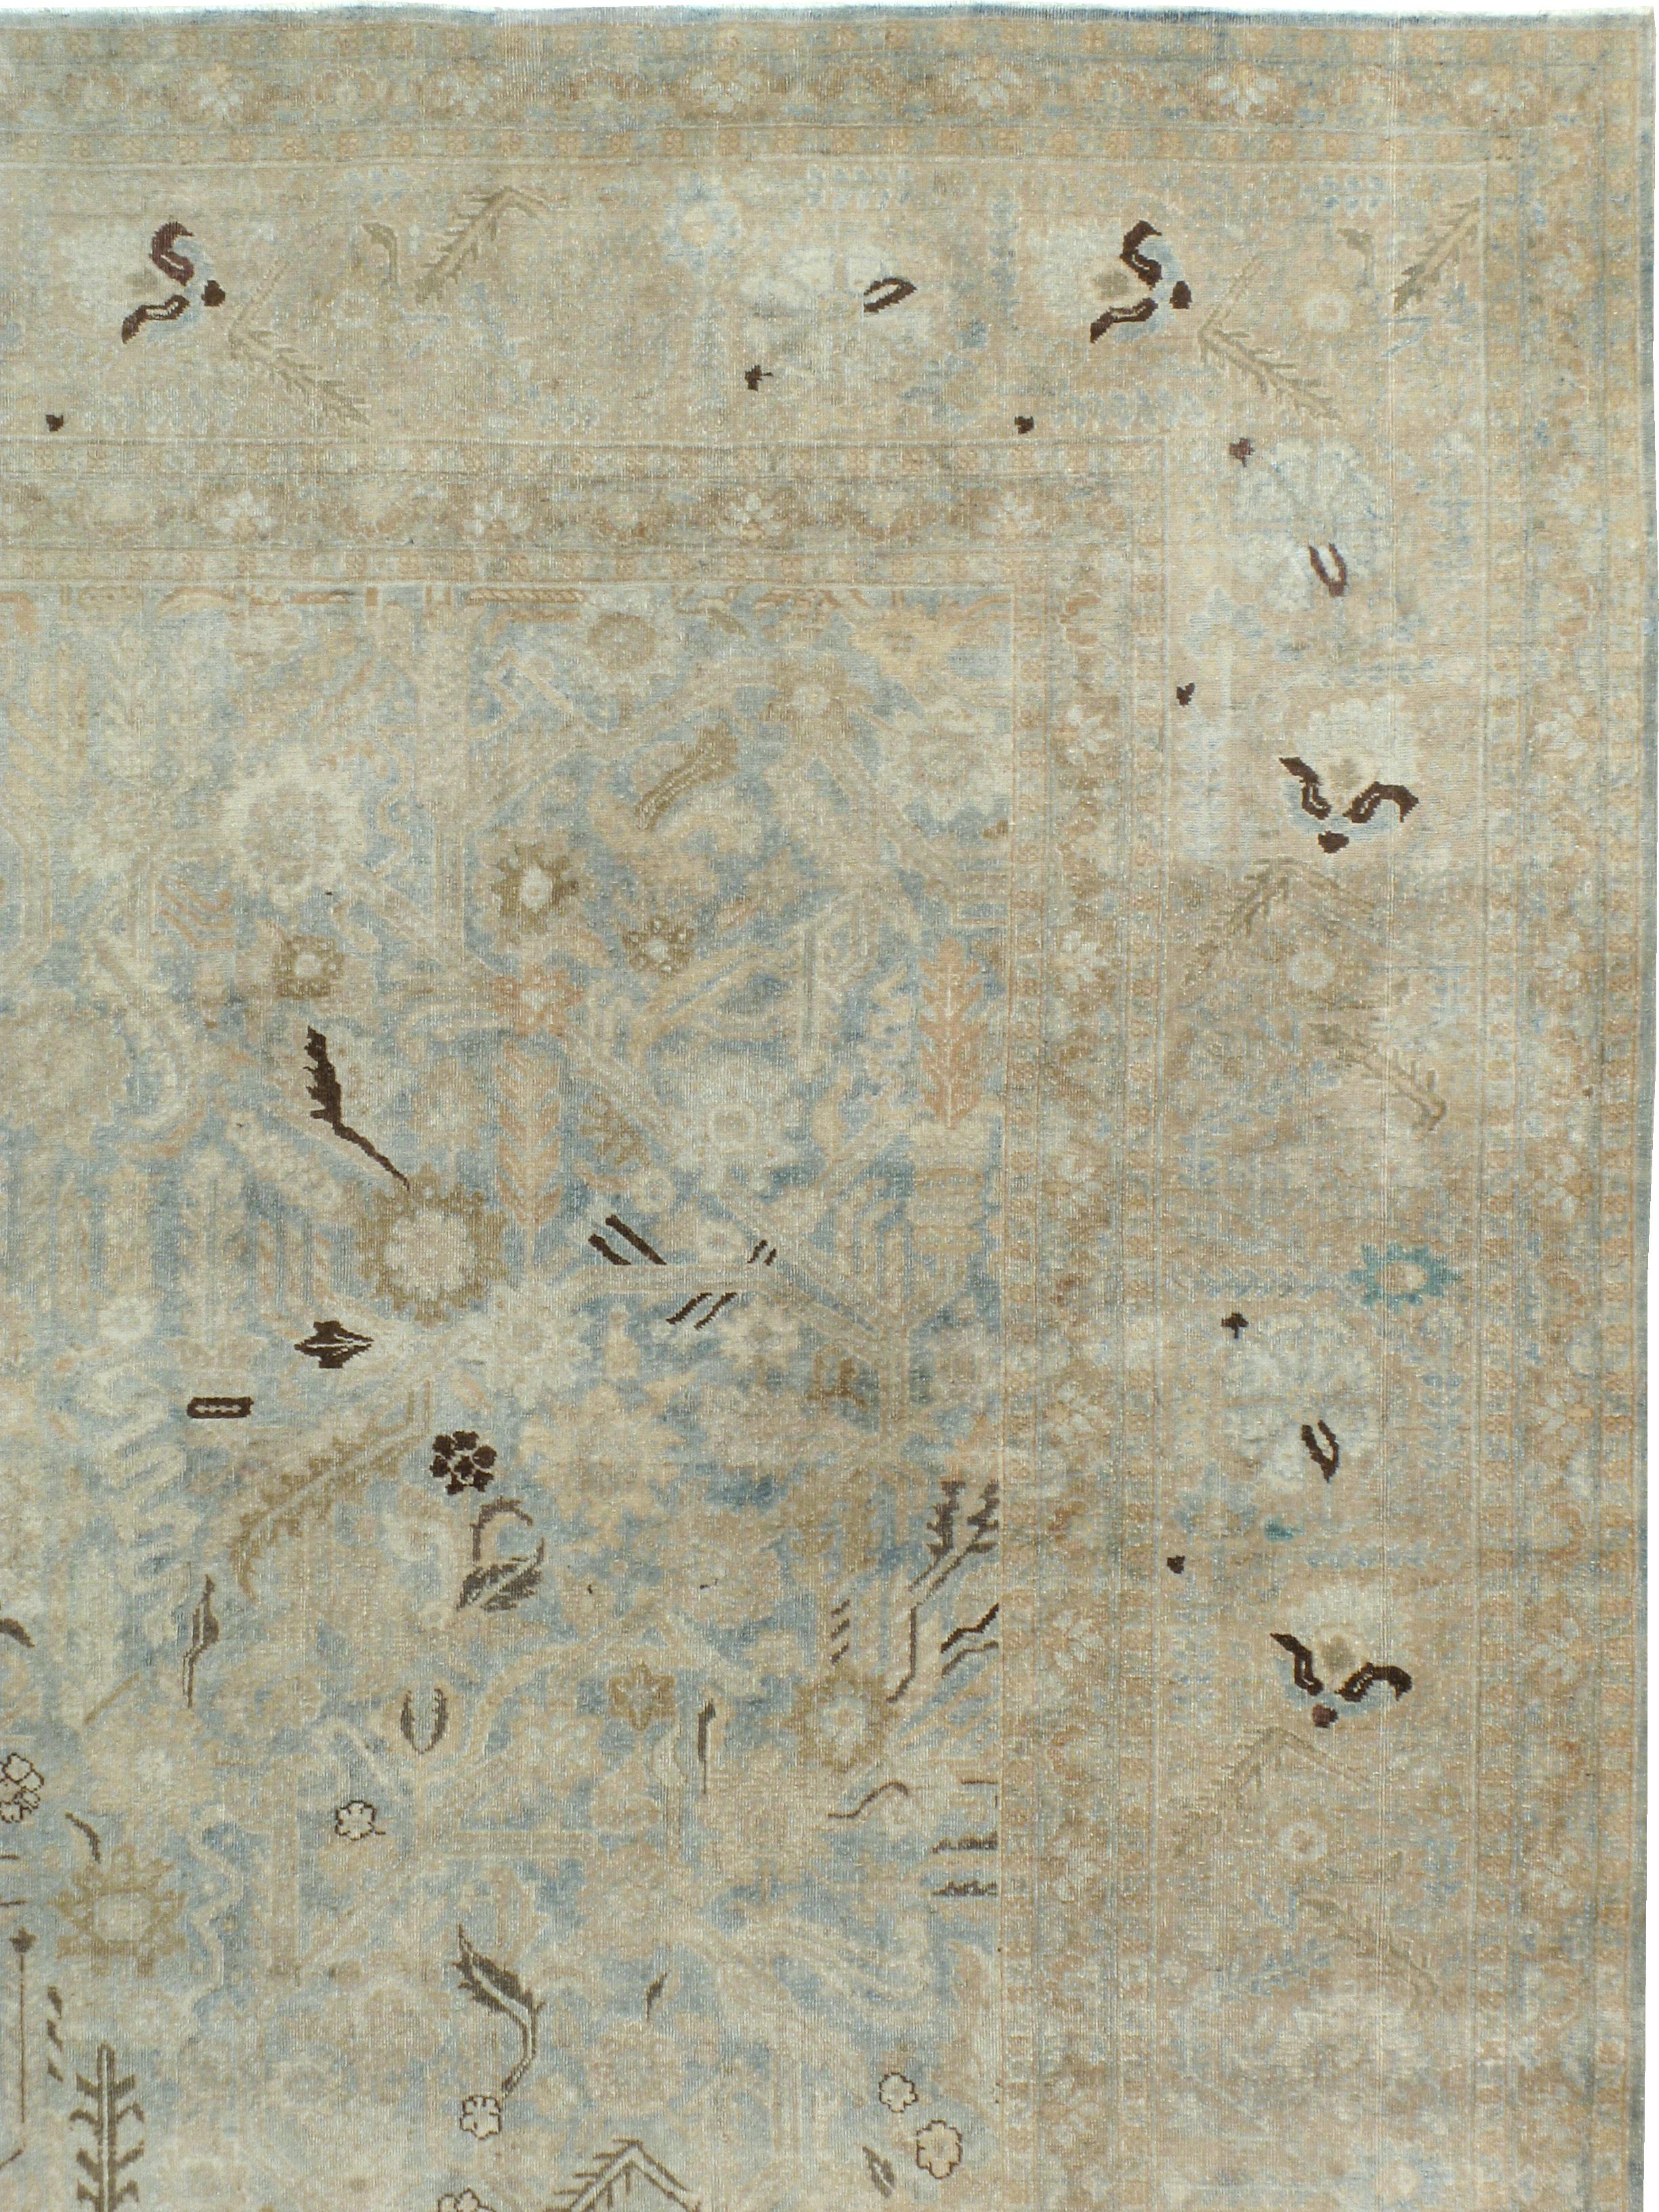 Antique Persian Tabriz Carpet (Handgeknüpft)